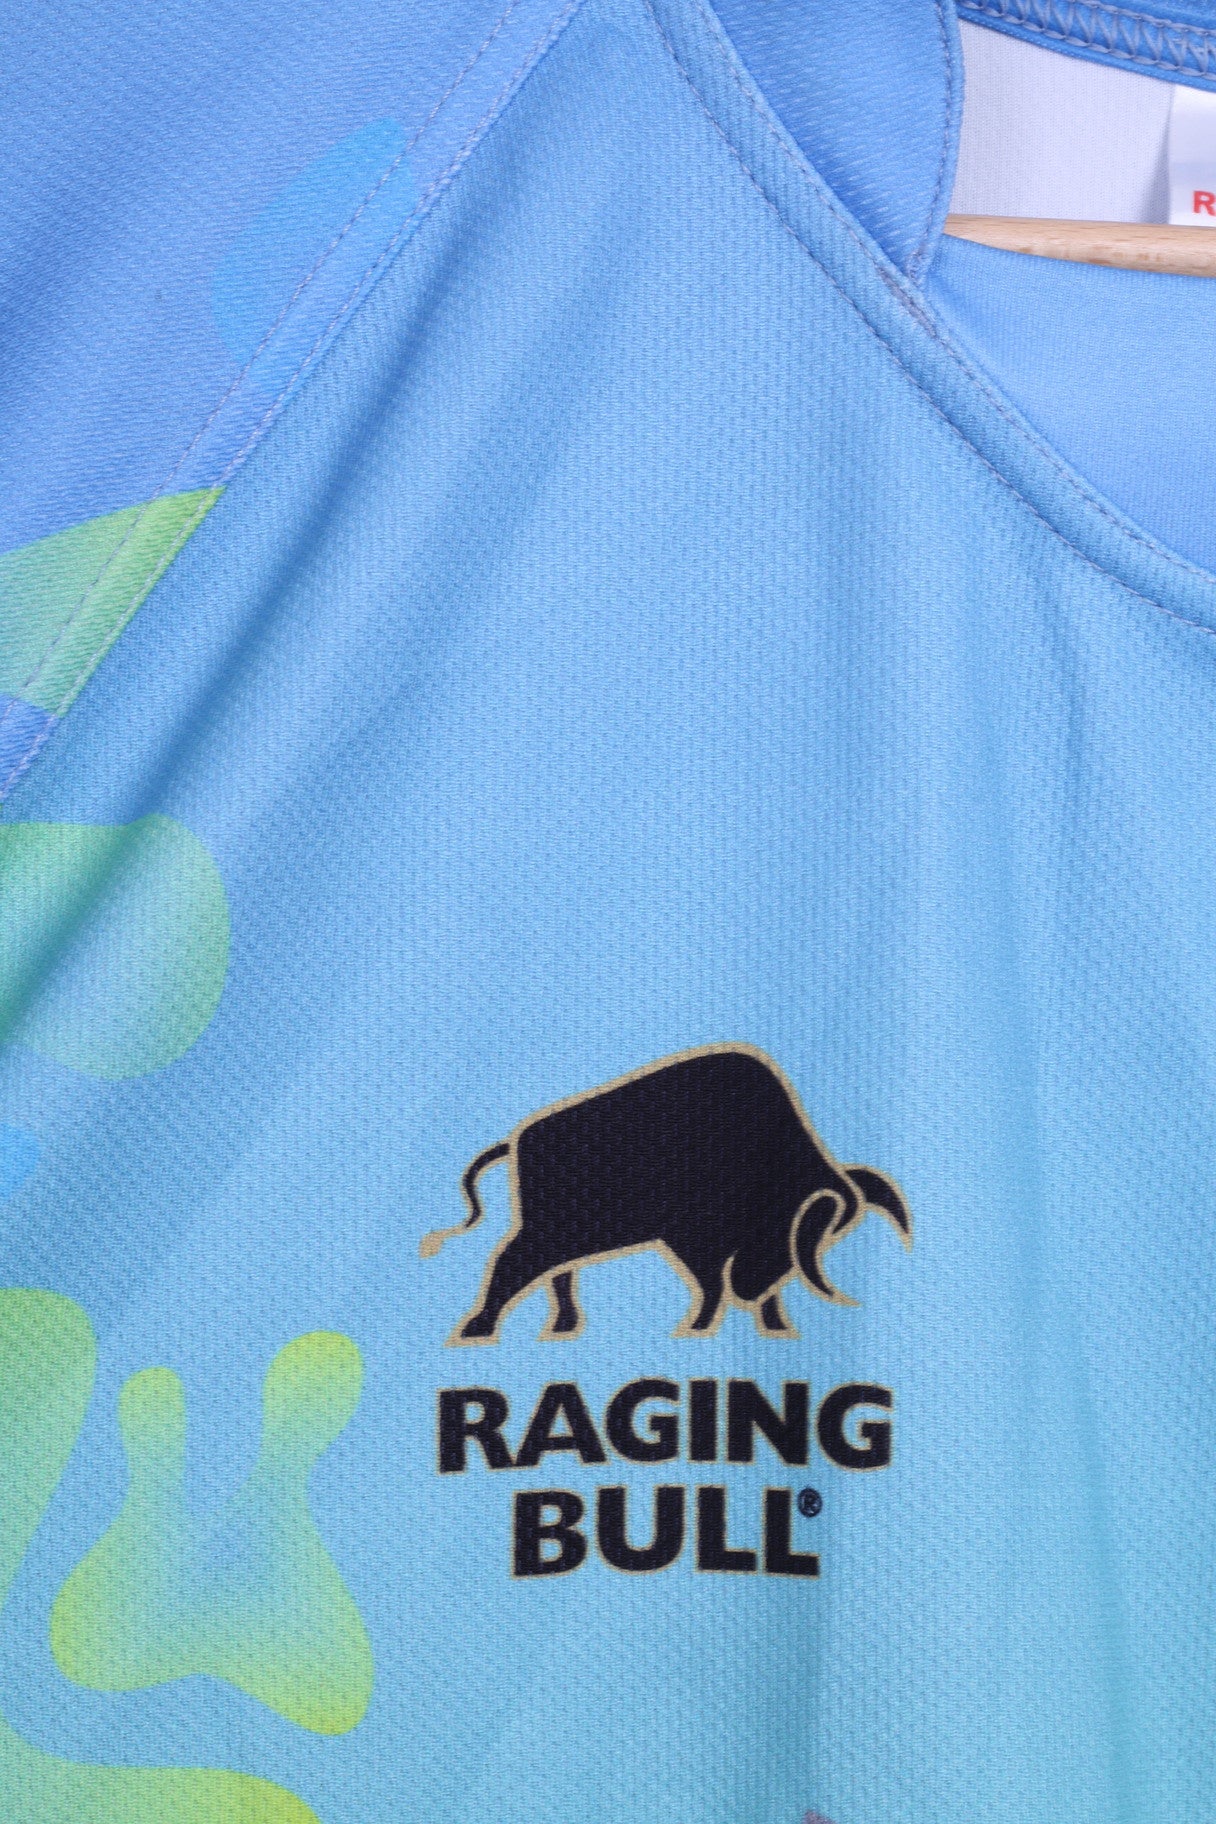 Raging Bull S.E.A.E. Mens 42'' Shirt Rugby Football Club Blue - RetrospectClothes